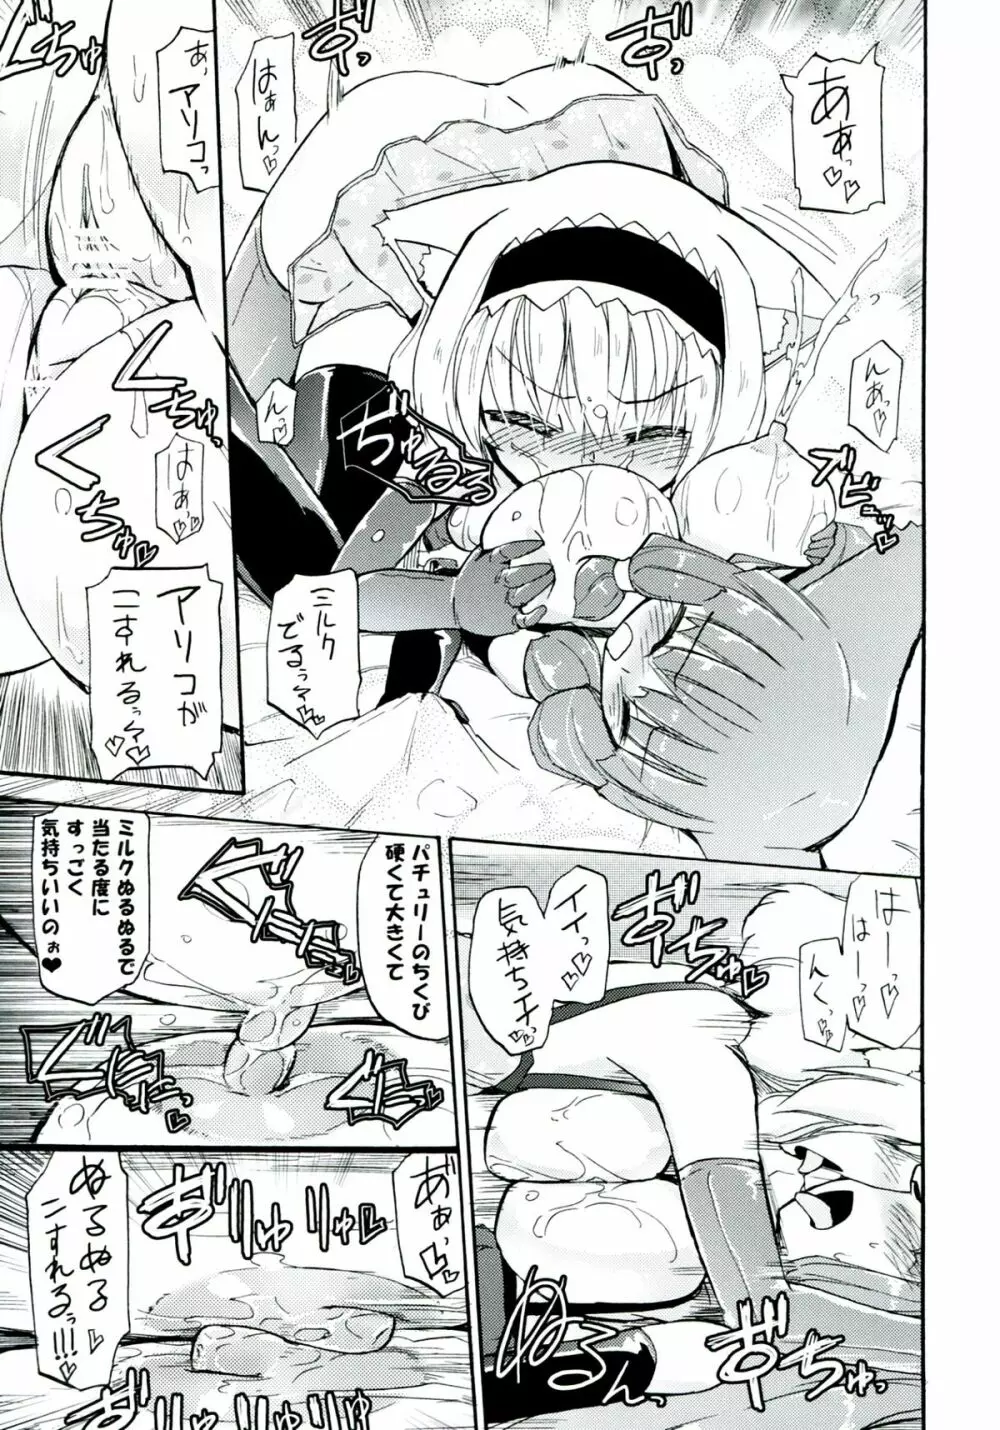 Homuraya Milk ★ Collection 2 - page23